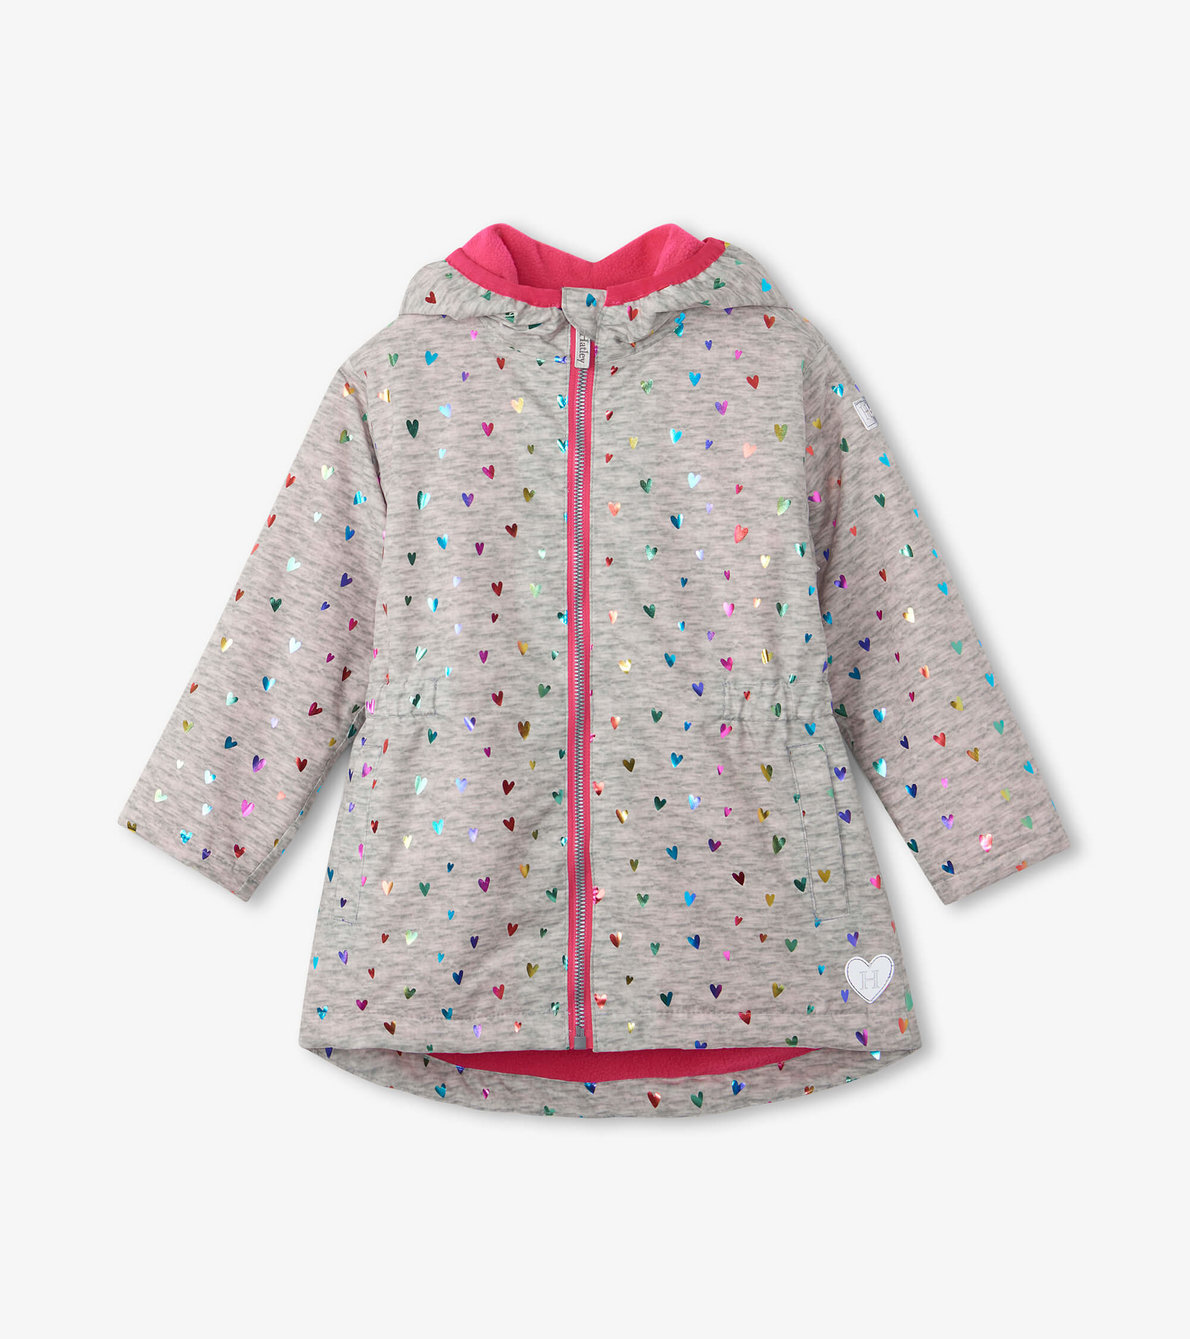 View larger image of Girls Confetti Hearts Zip-Up Lightweight Rain Jacket